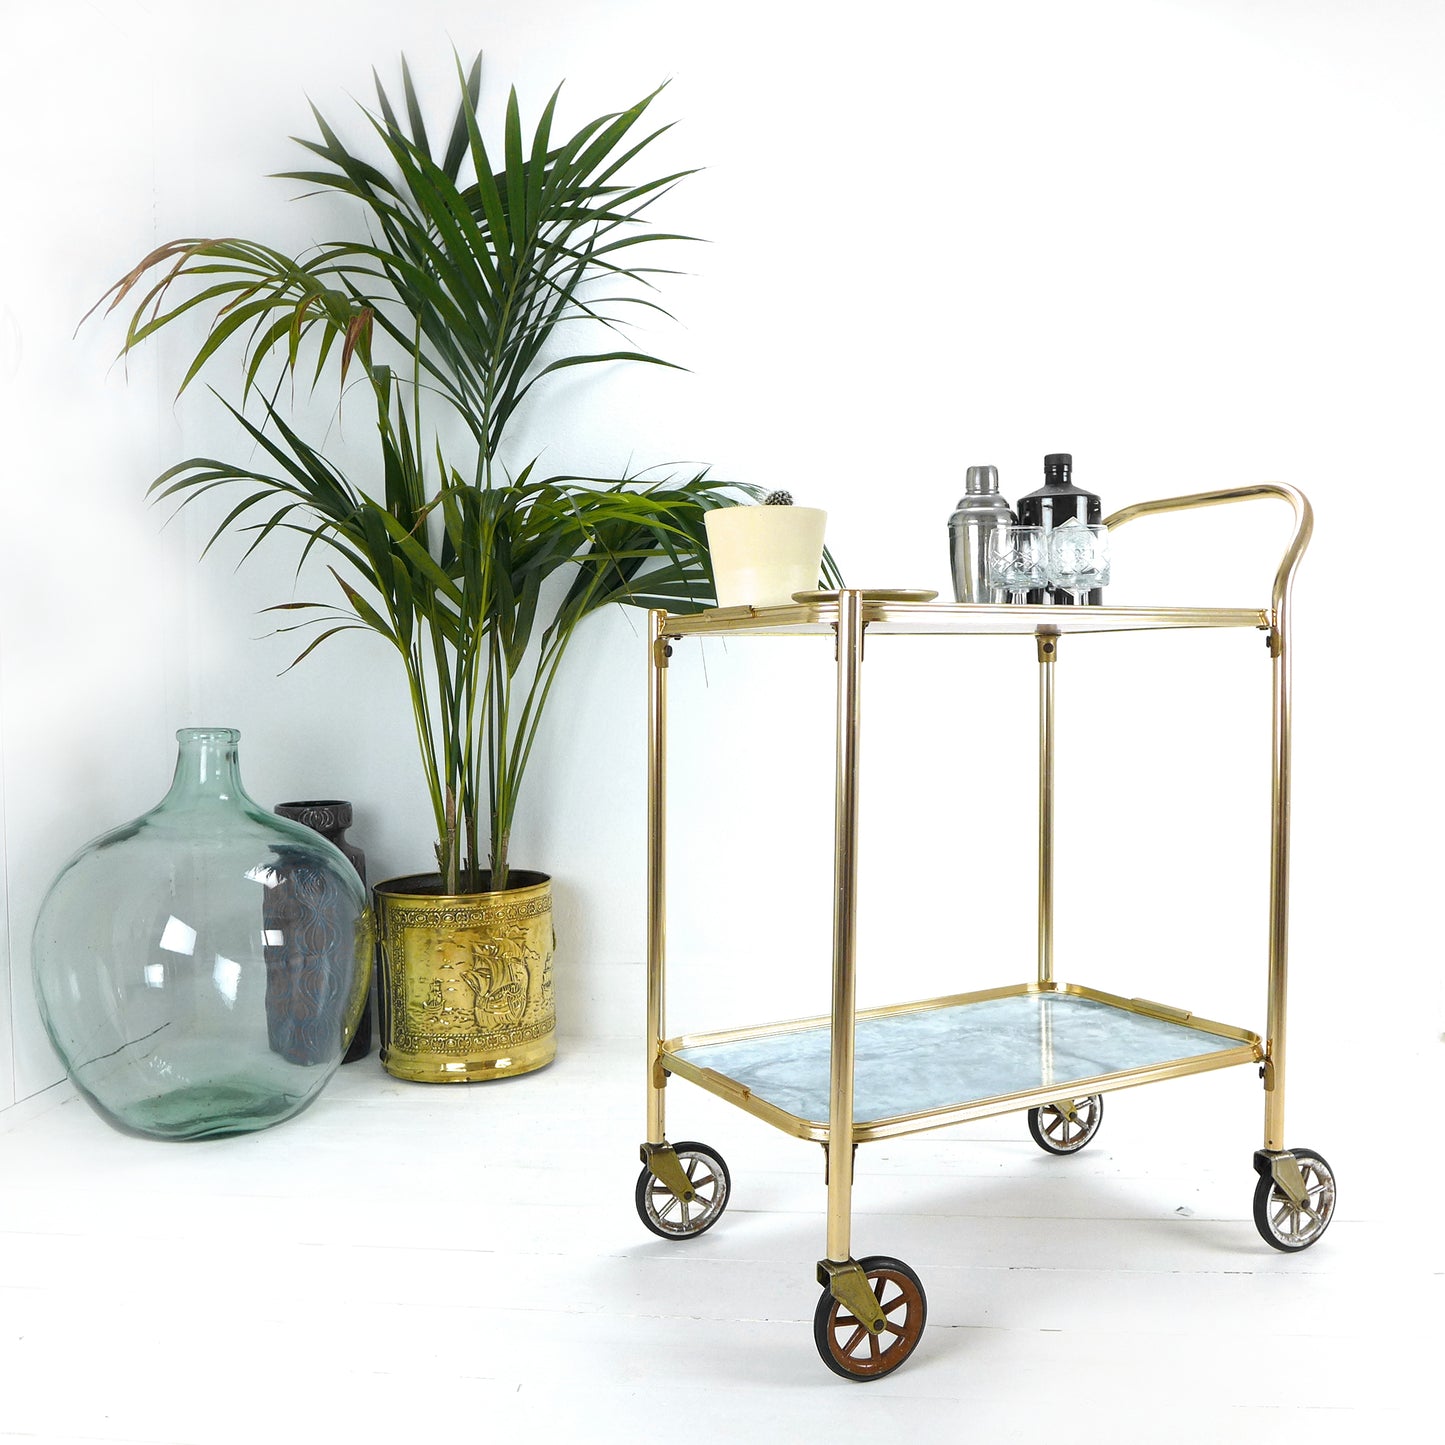 Mid Century Drinks Trolley - Vintage Bar/Drinks Cart on Wheels - Gold Metal/Brass